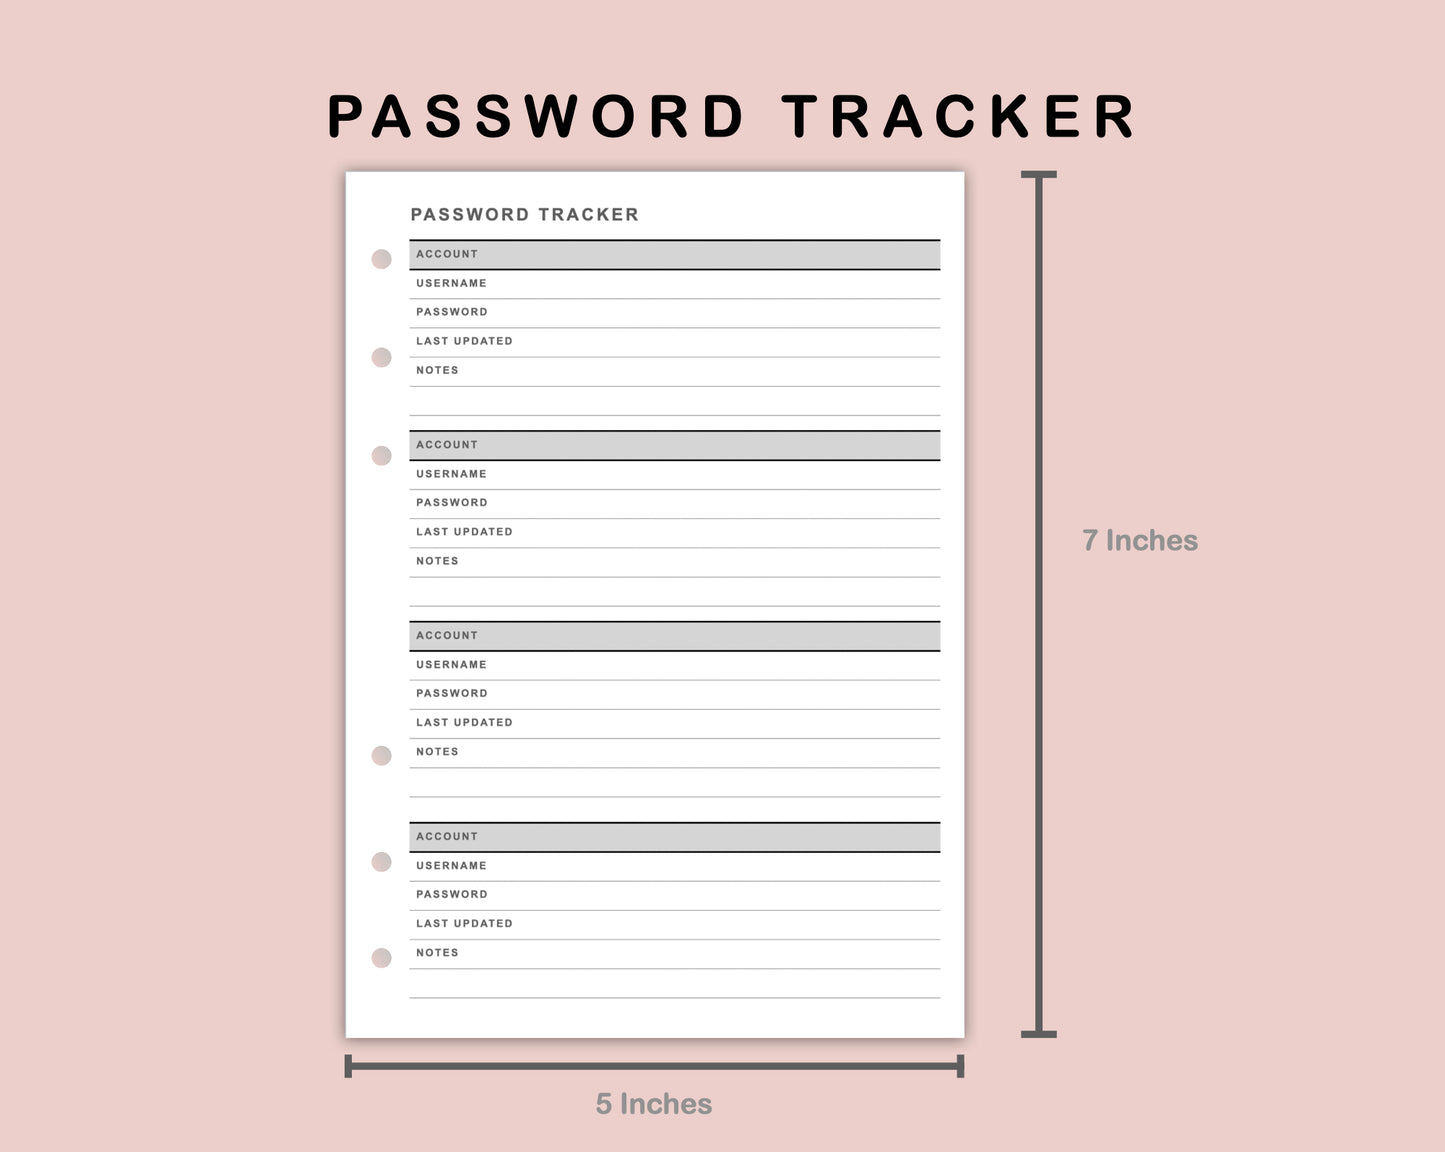 B6 Inserts - Password Tracker